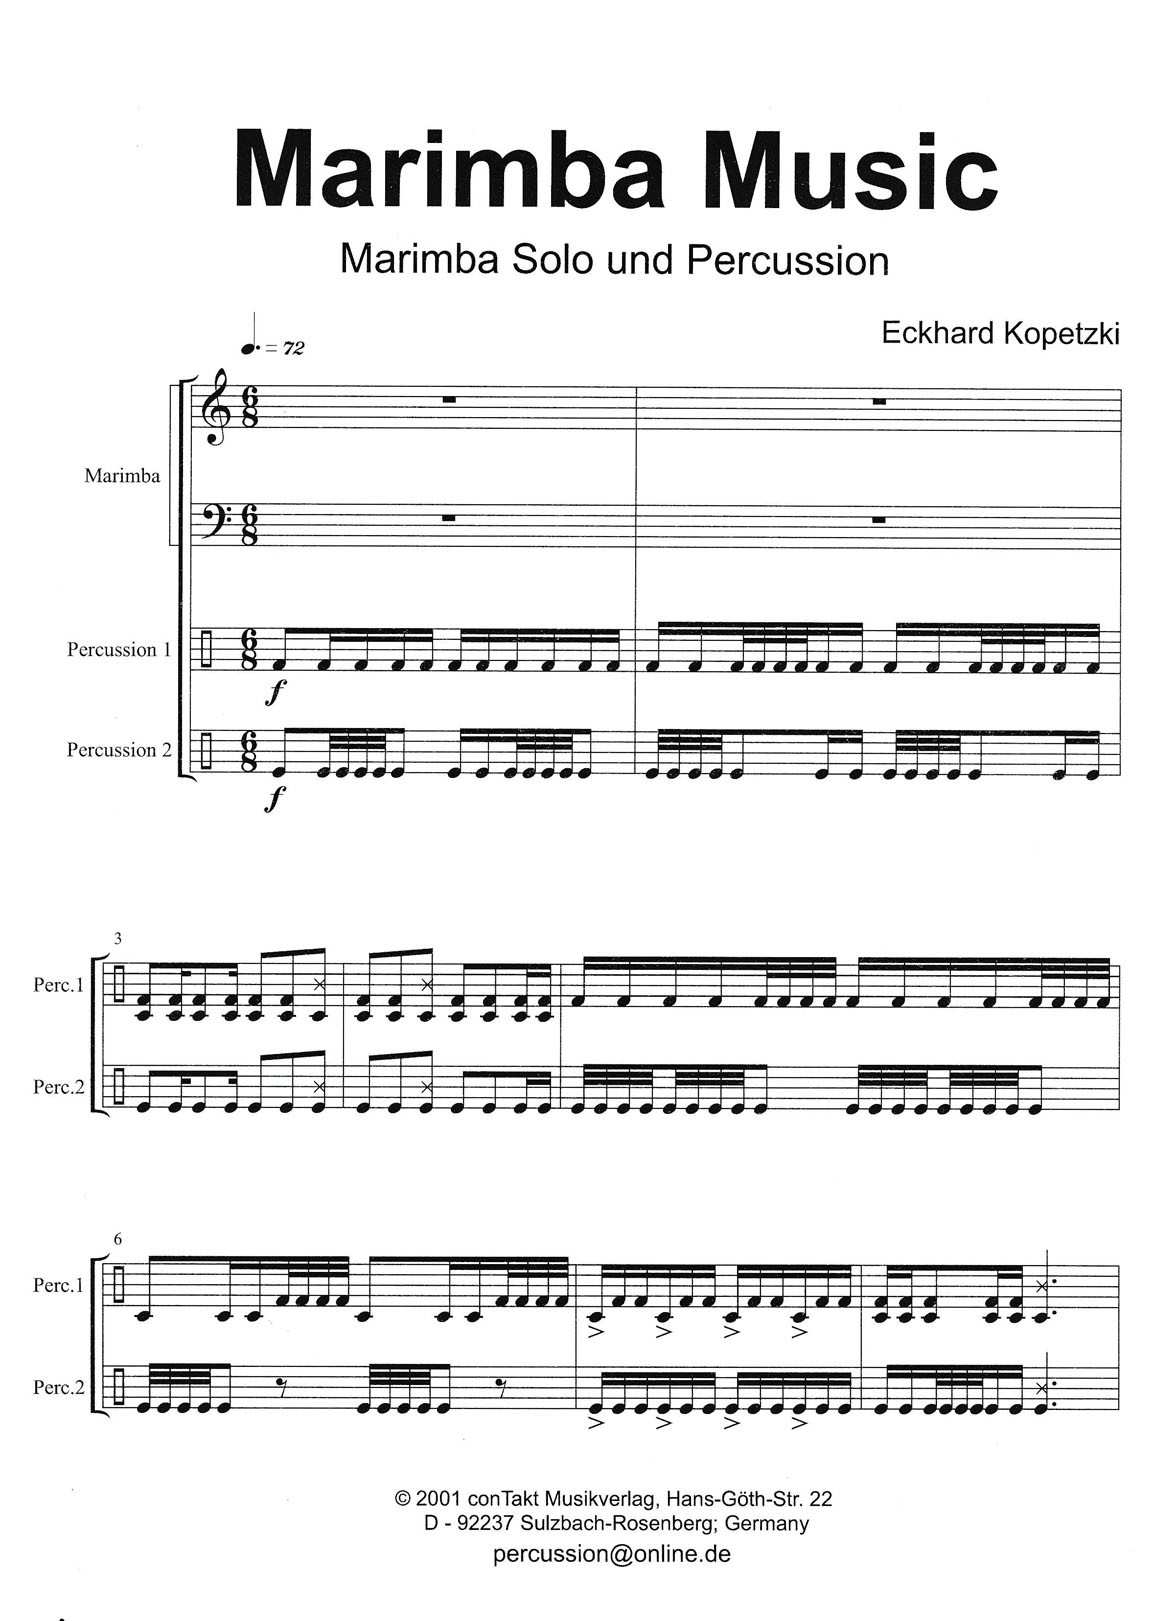 Marimba Music by Eckhard Kopetzki